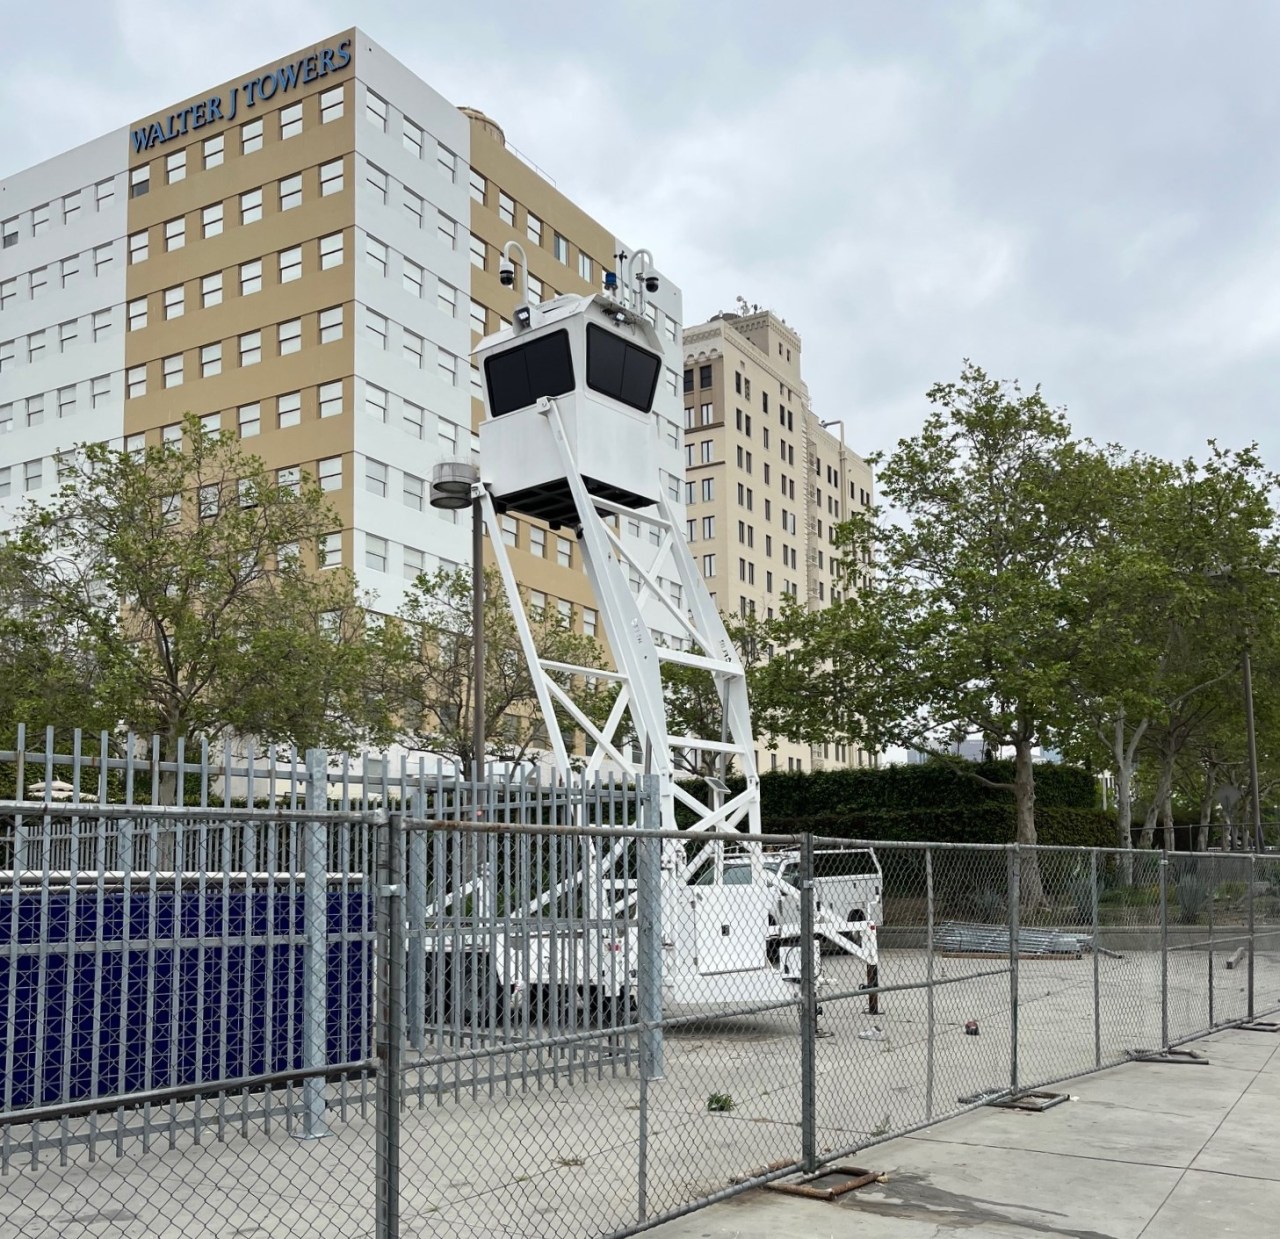 Metro mobile surveilance tower